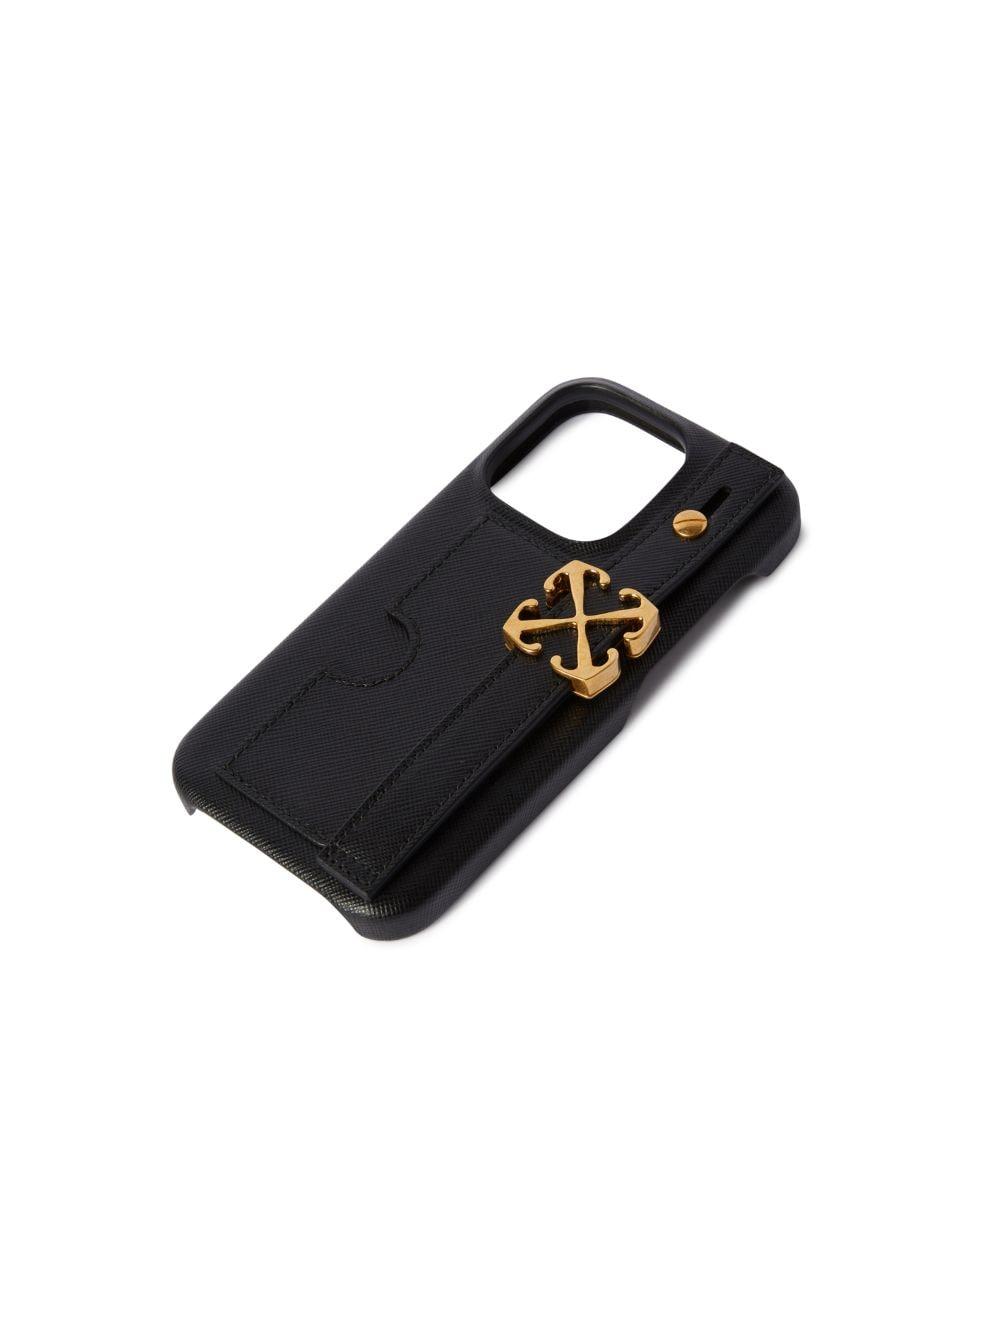 Louis Vuitton Black Puffy iPhone Case